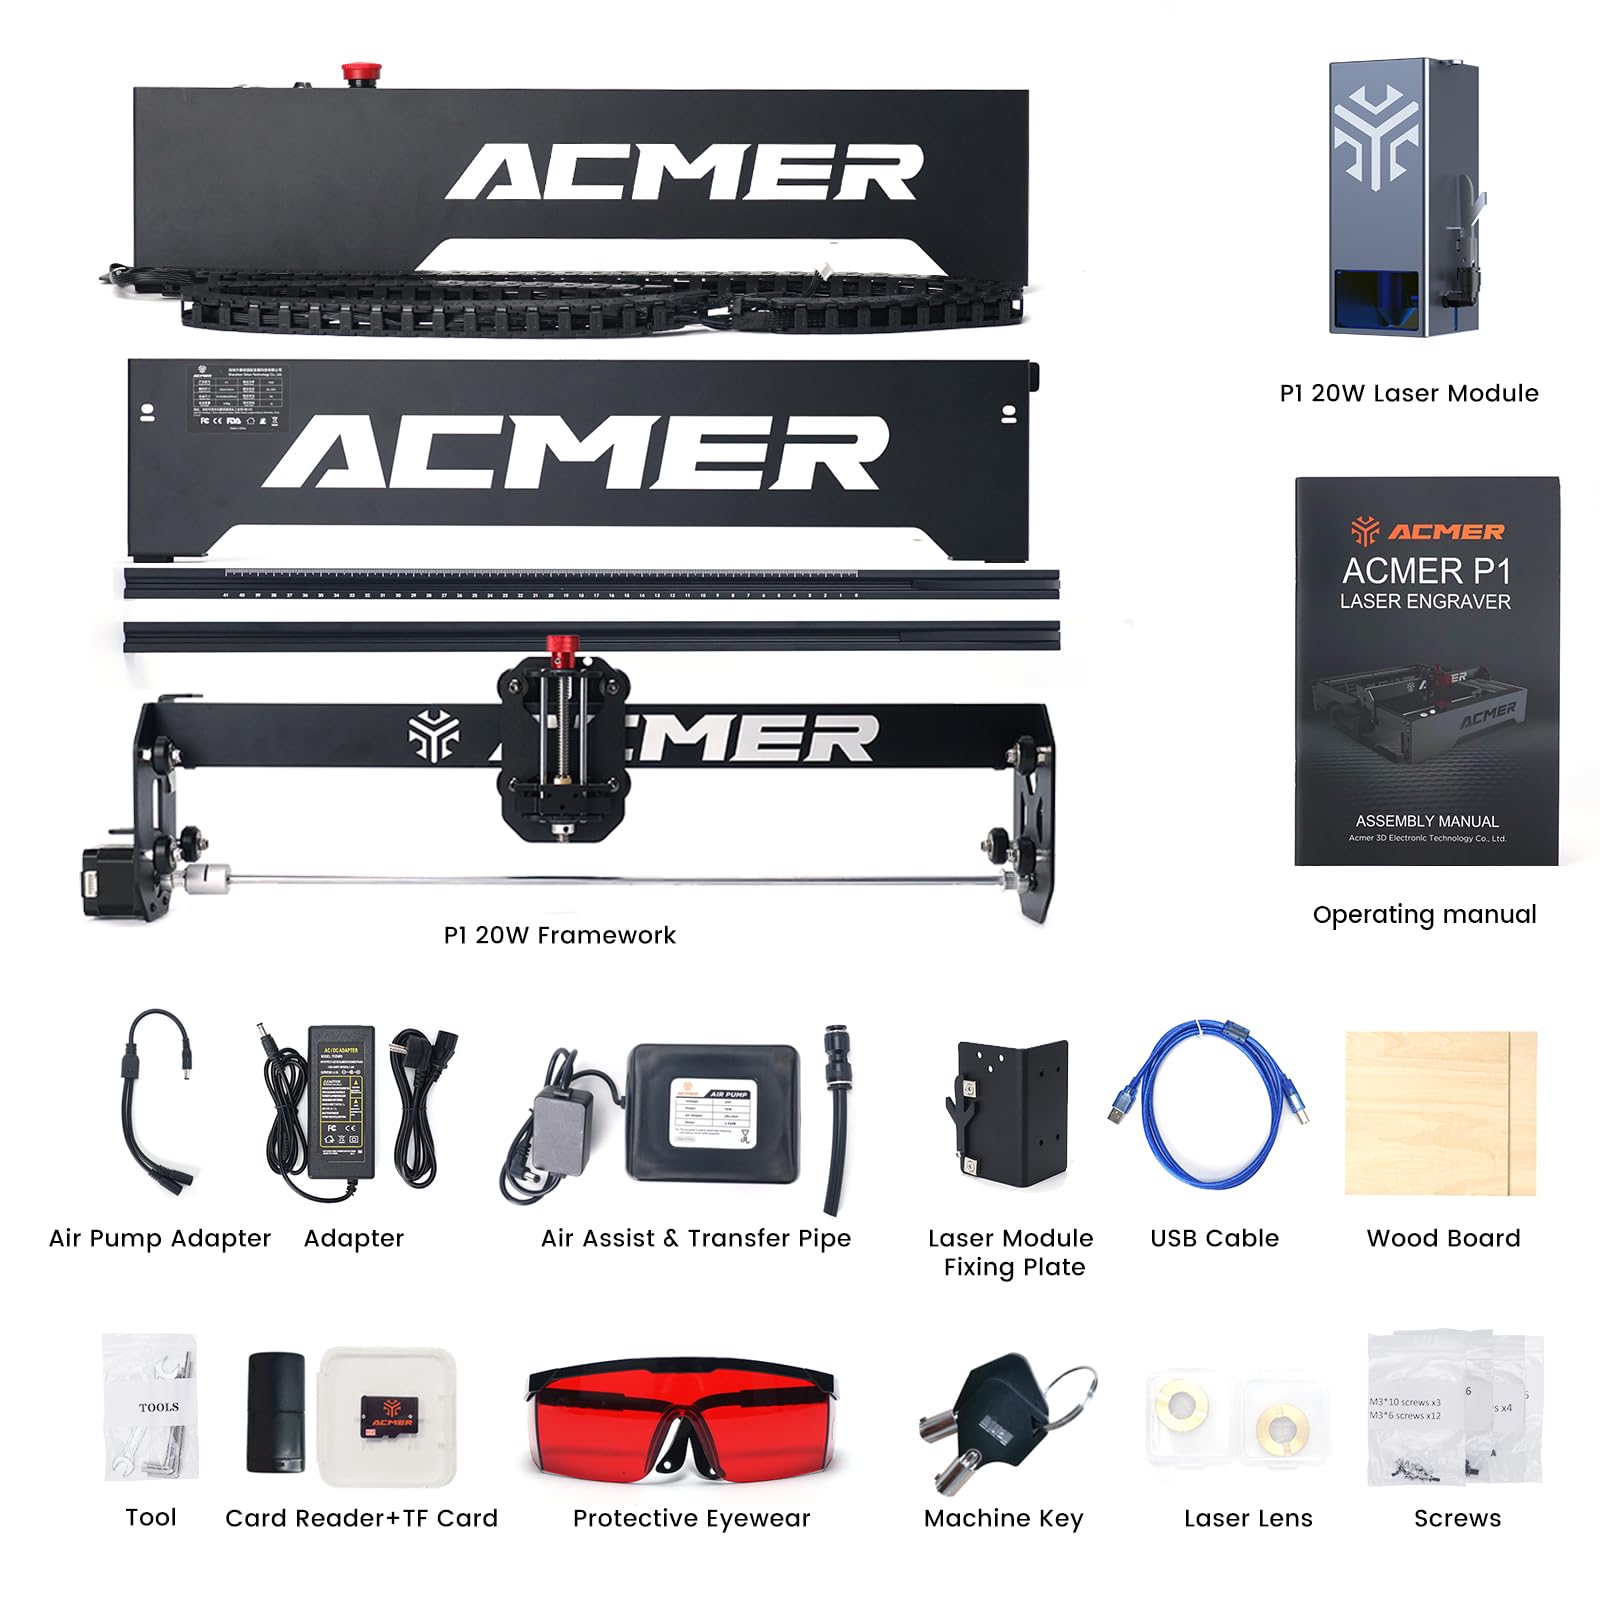 Acmer P1 20W Lasergravierer